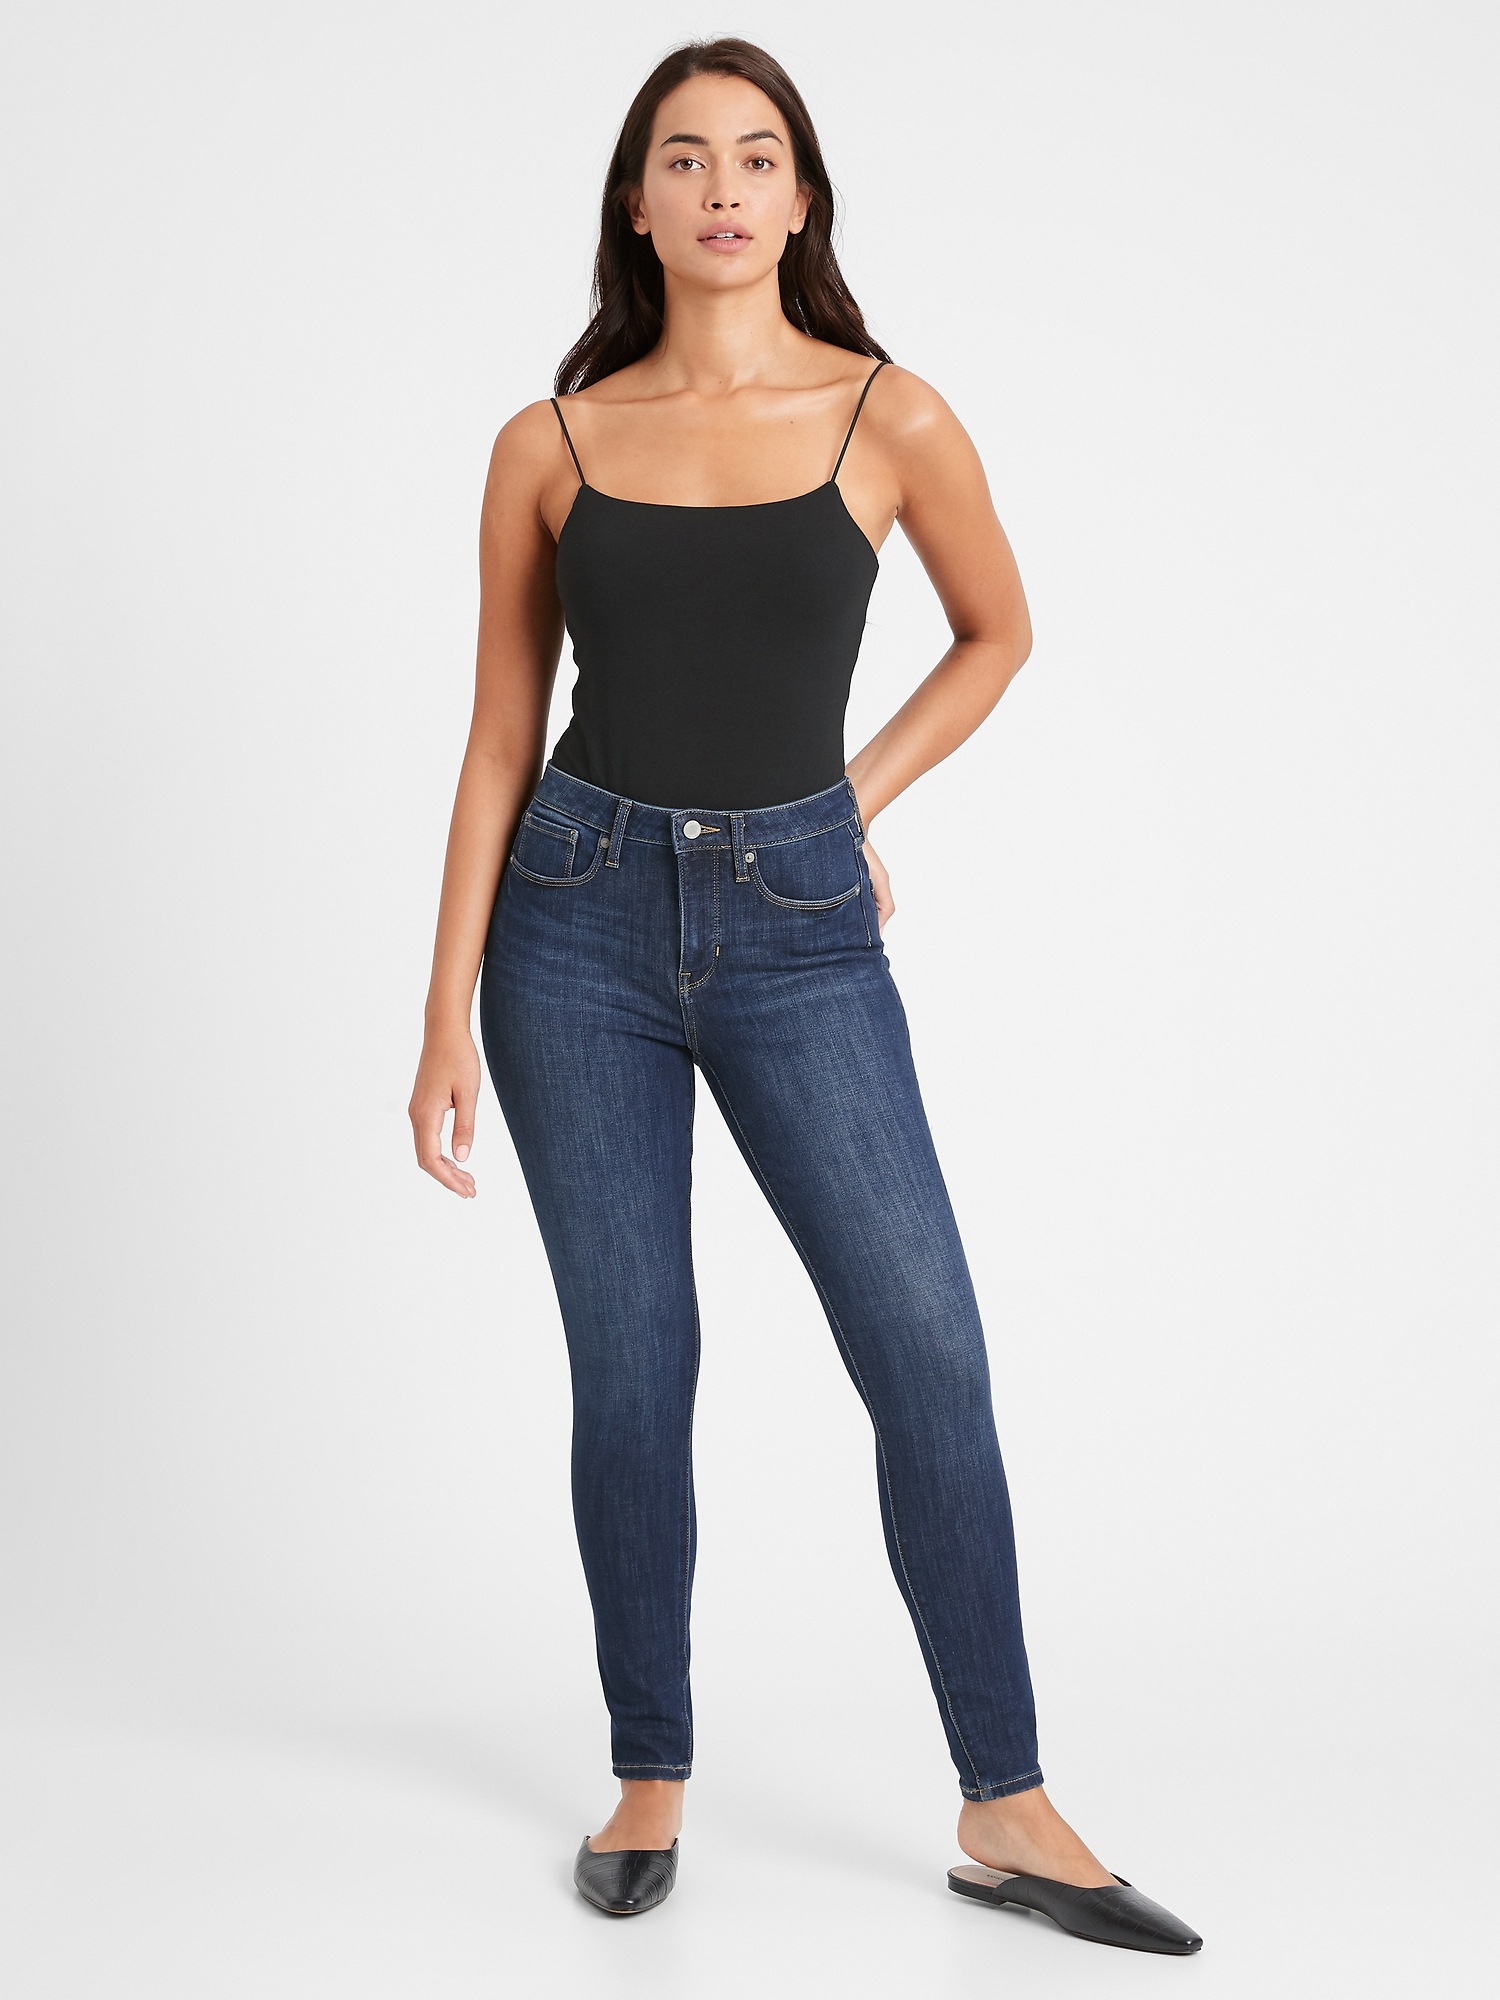 skinny jeans for curvy women